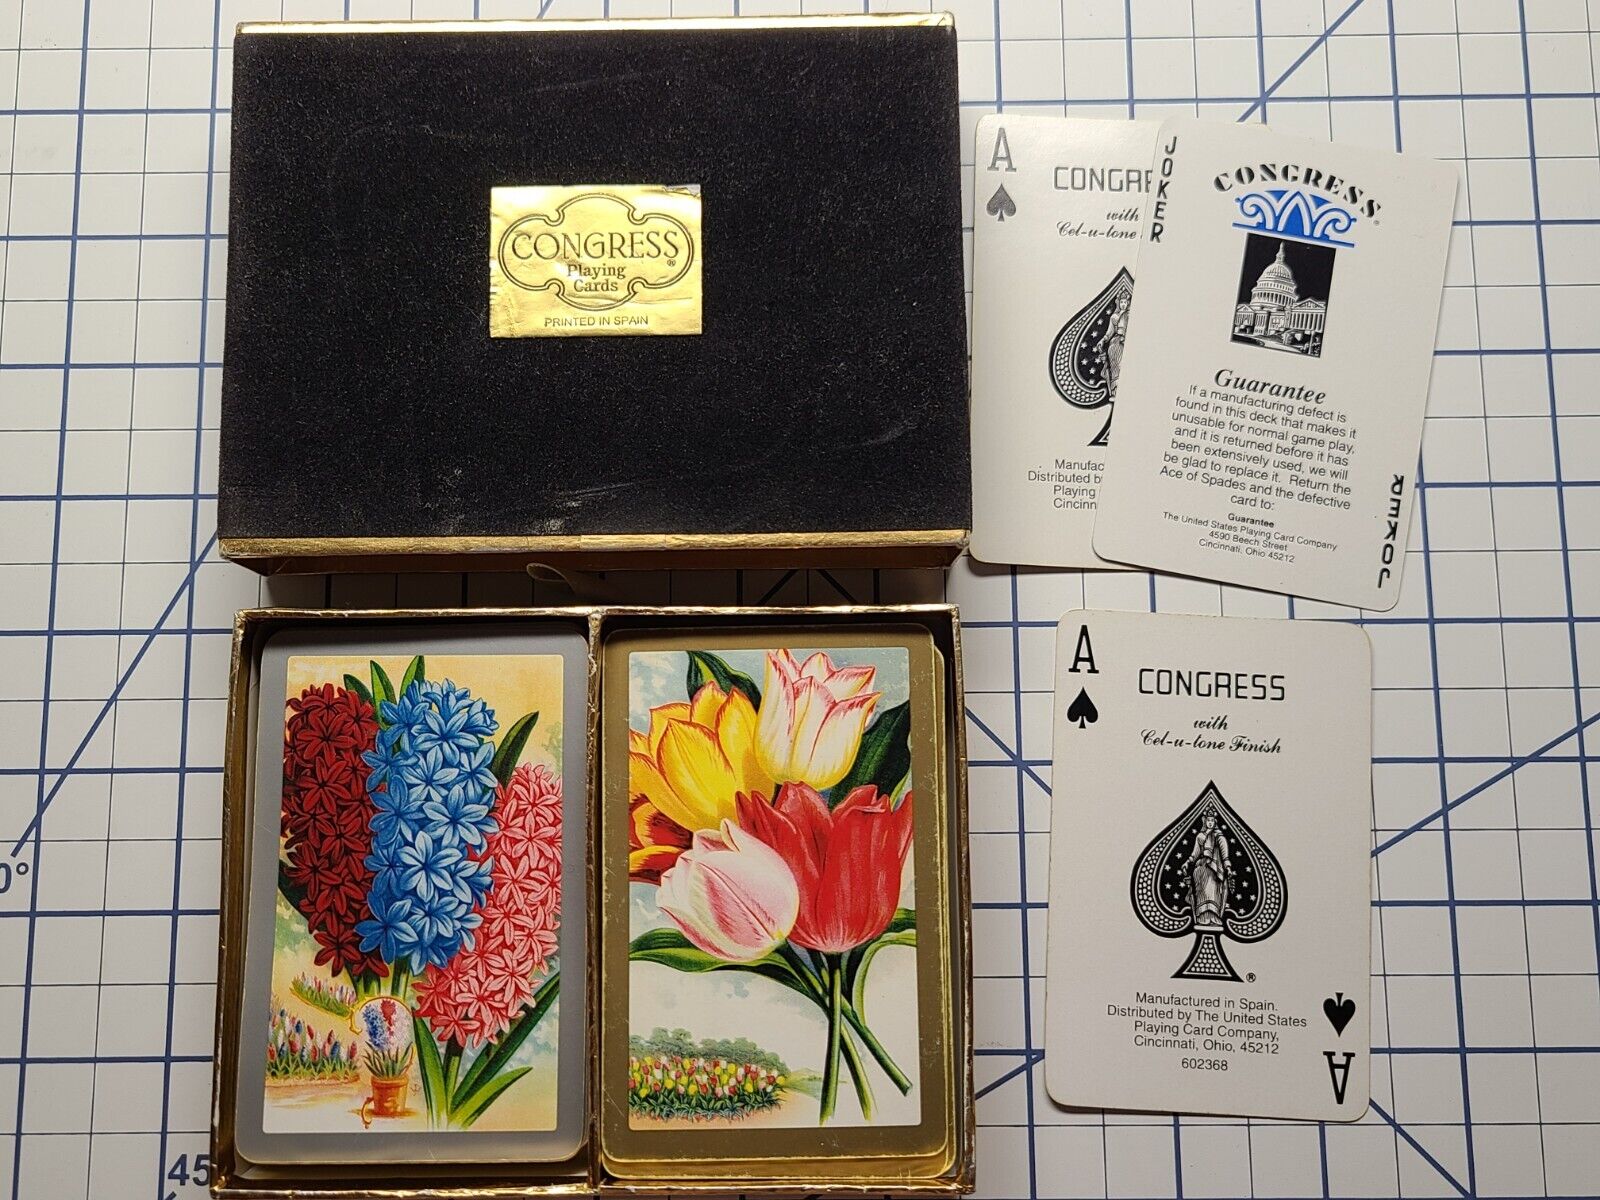 Vintage Congress Playing Cards - Floral Pattern - Cel-U-Tone Finish - 2 Decks